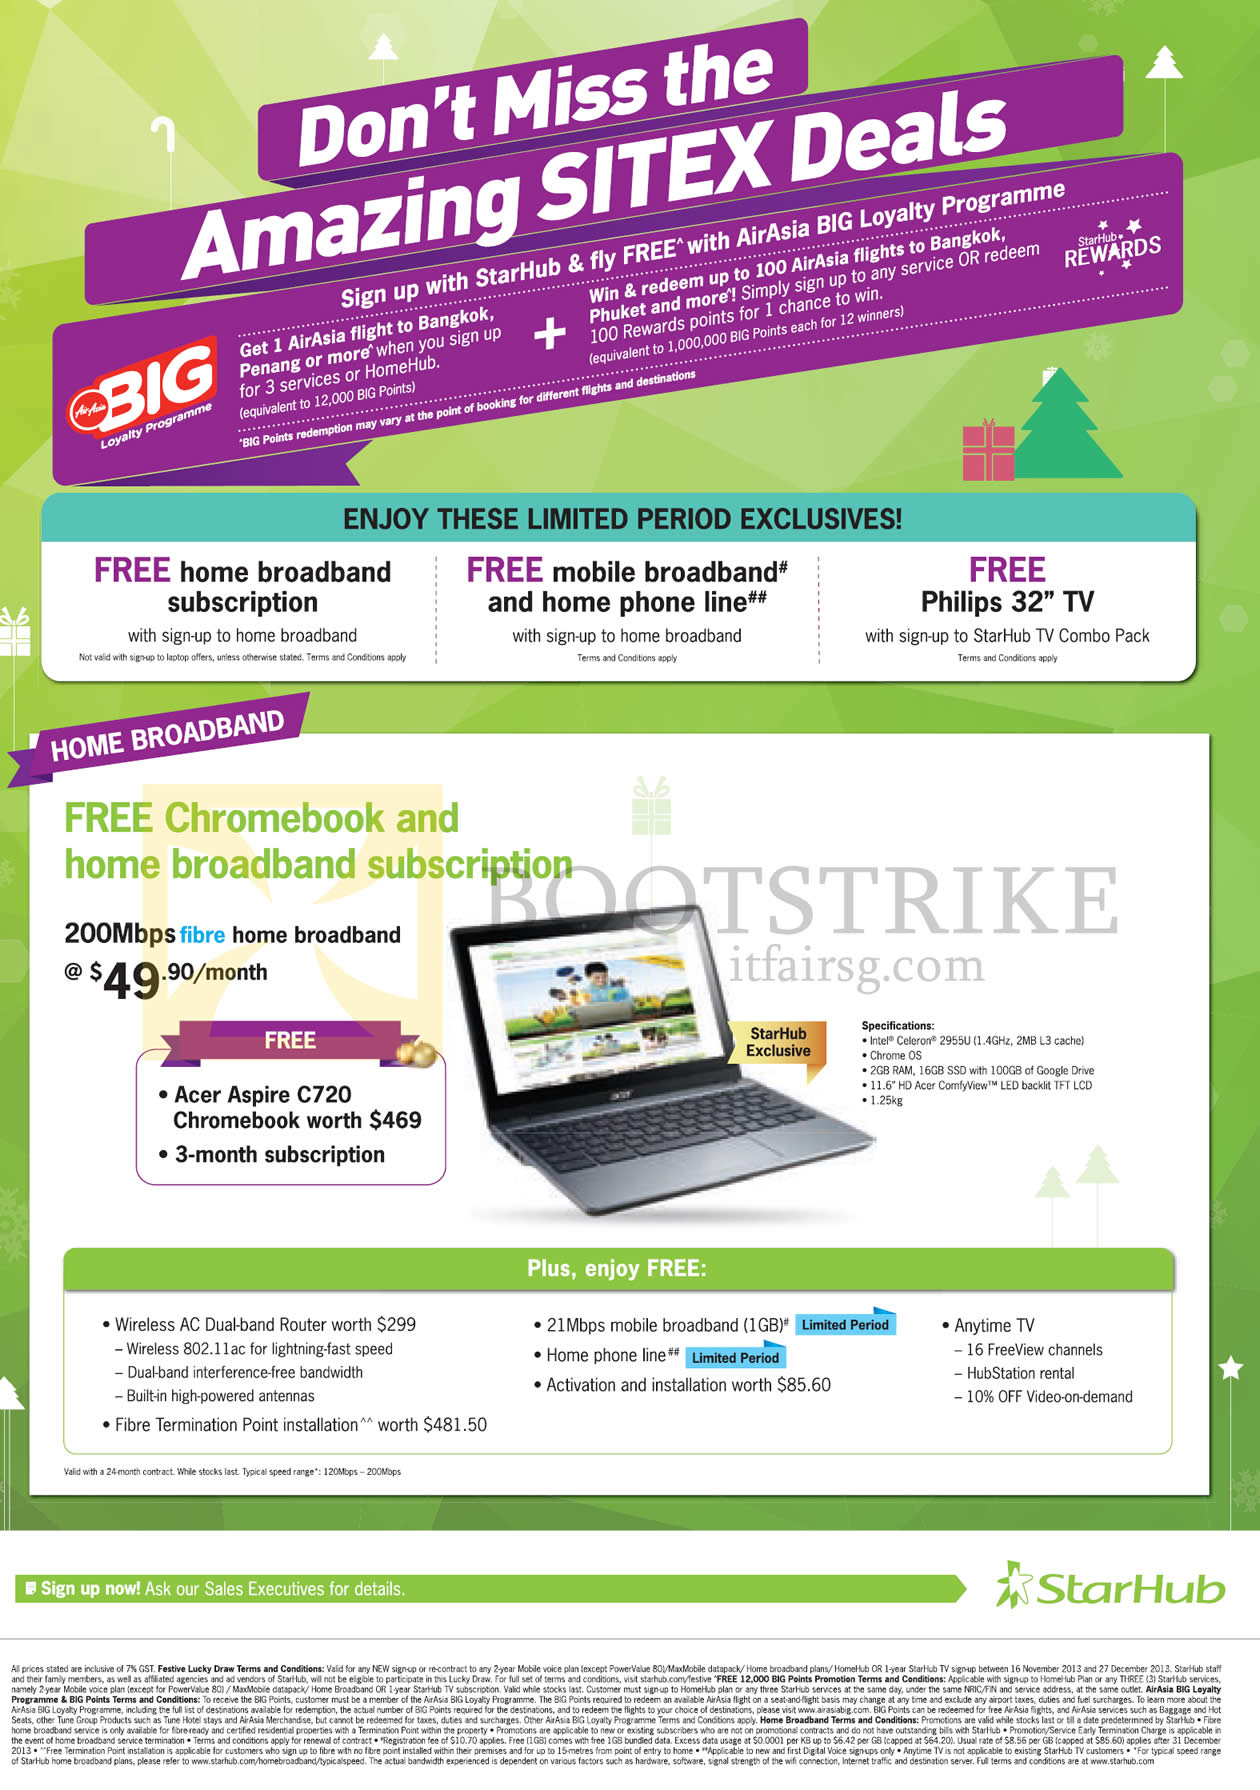 SITEX 2013 price list image brochure of Starhub Booth Exclusives, Fibre Broadband 200Mbps 49.90 Free Acer Aspire C720 Chromebook, Free Home Broadband, Free Mobile Broadband, Free Philips 32 TV